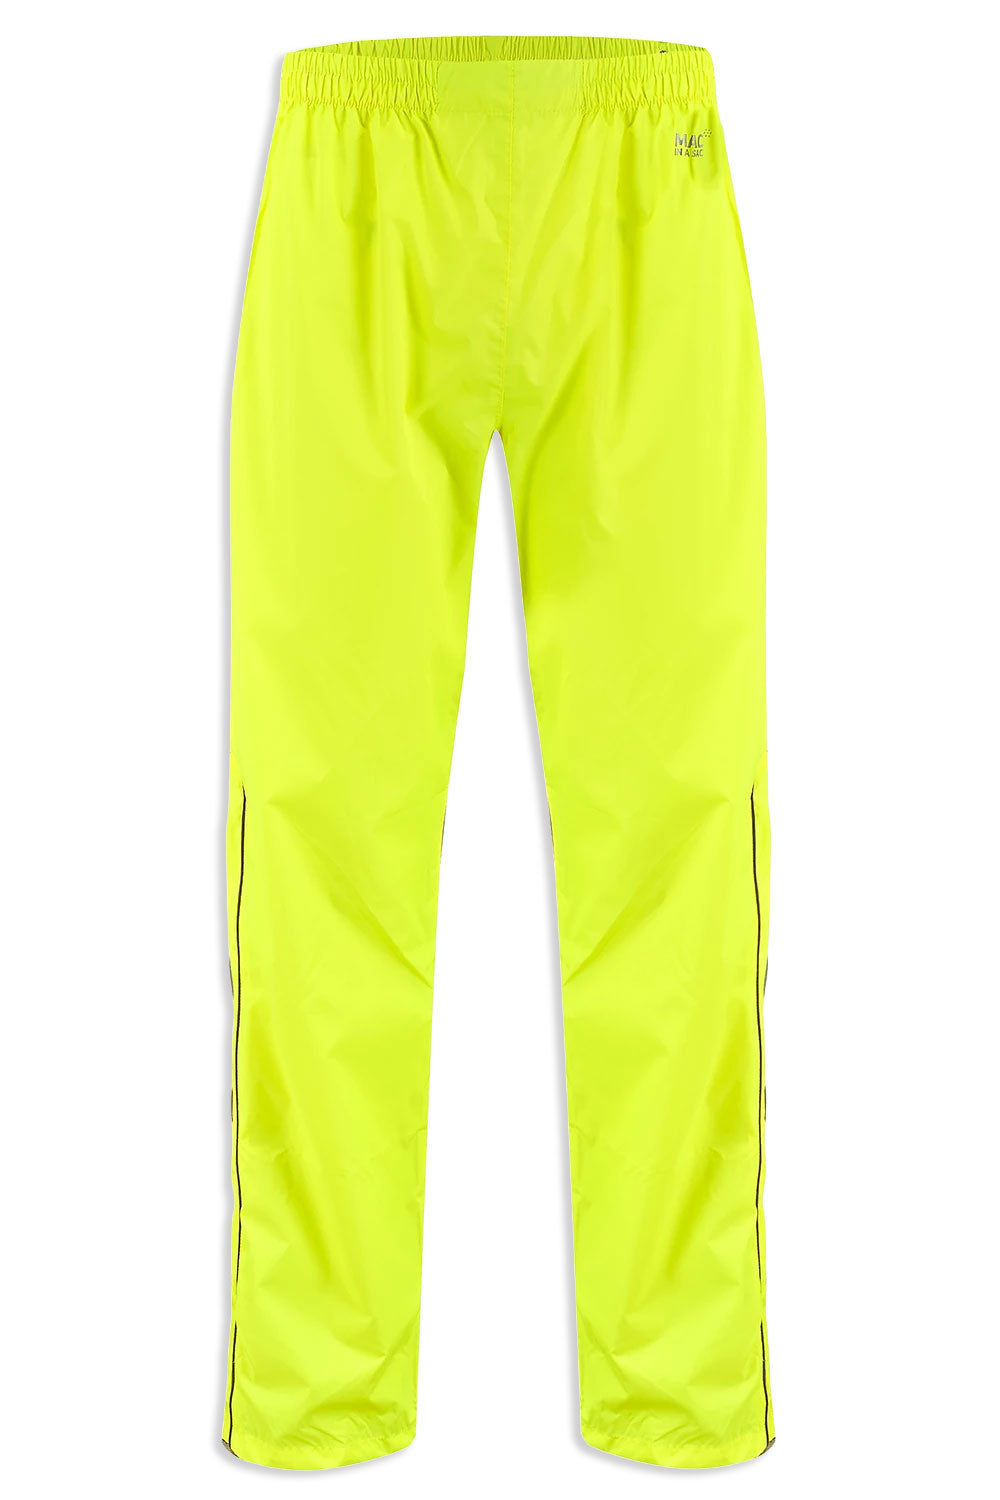 Mac In A Sac Full Zip Overtrousers Neon Yellow 